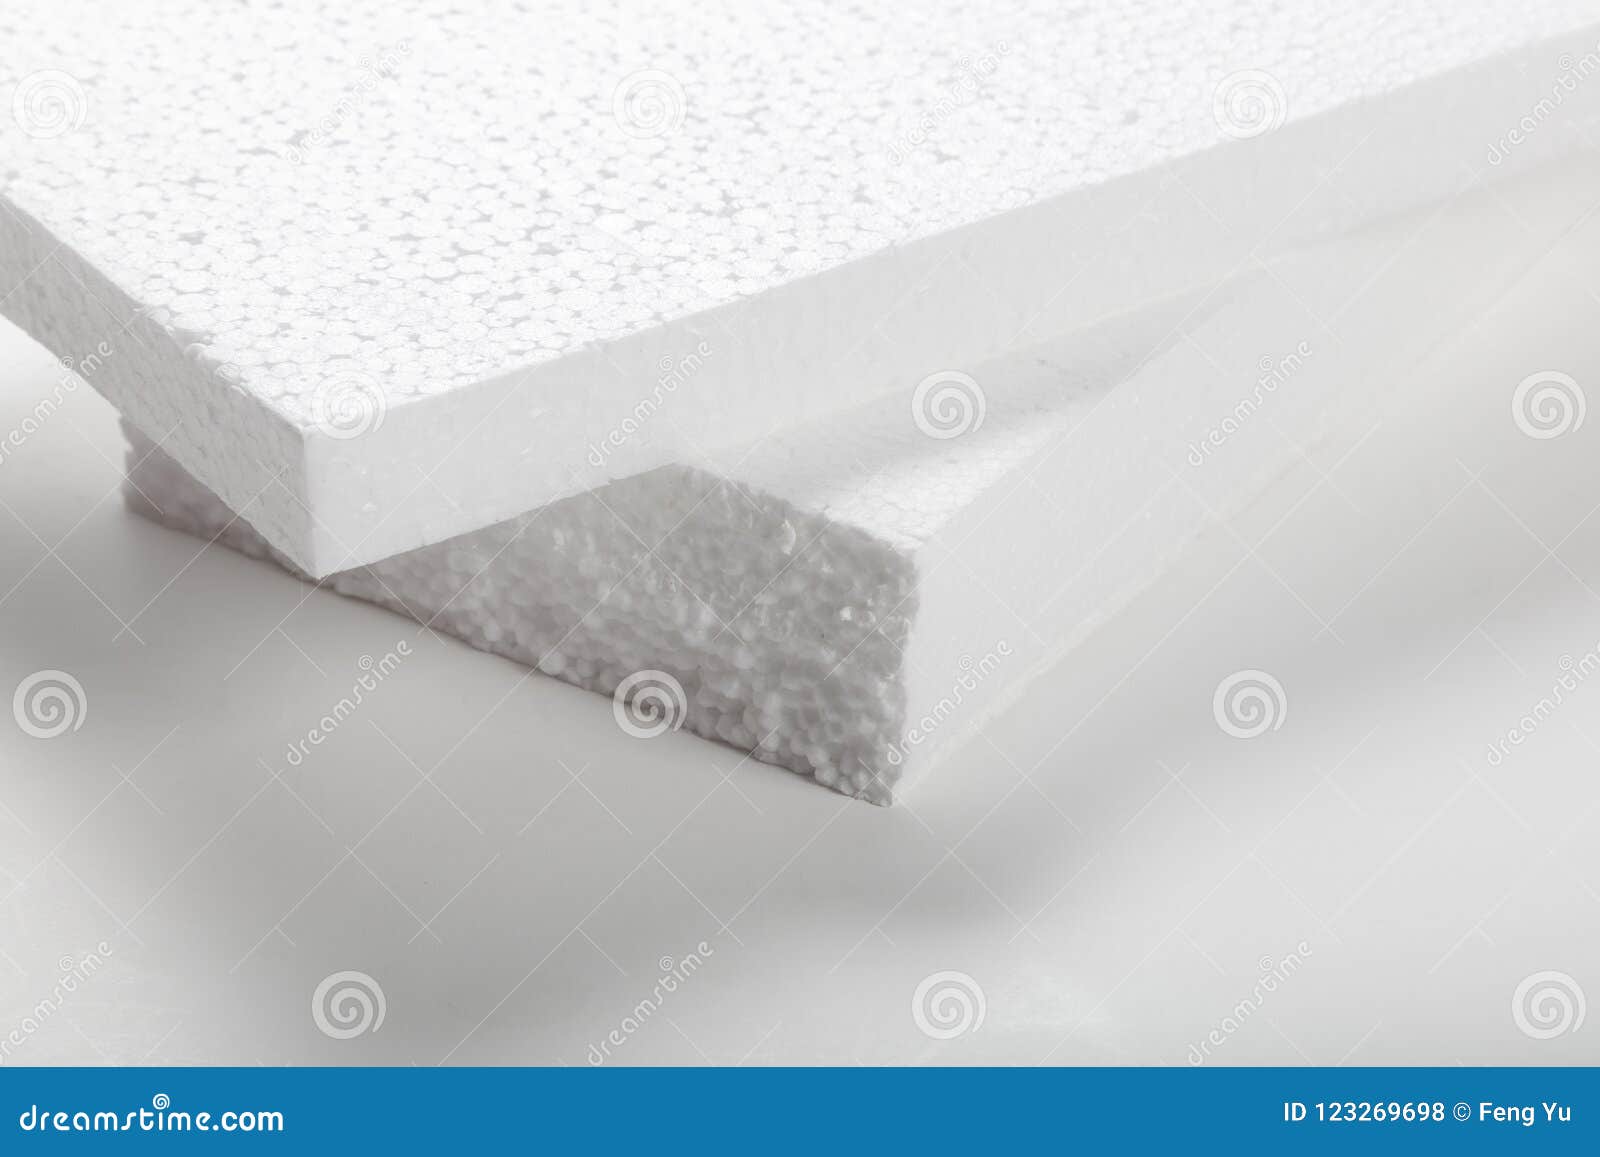 White foam board stock photo. Image of material, insulation